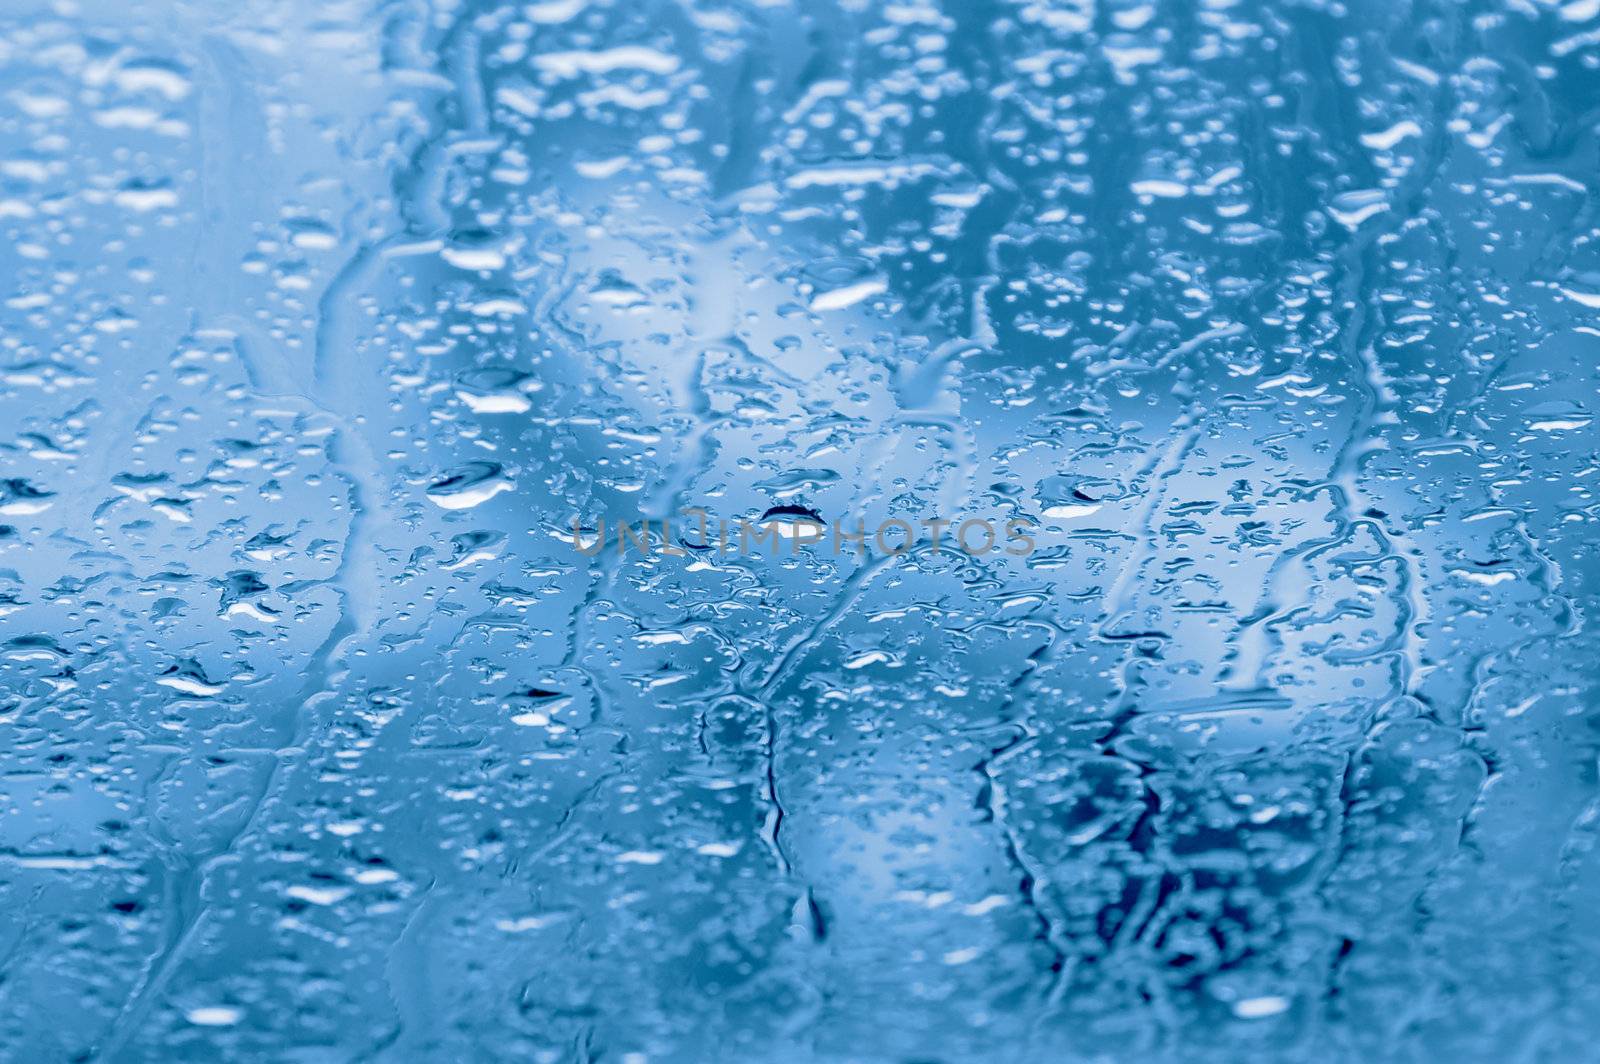  Rain drops on a window of car